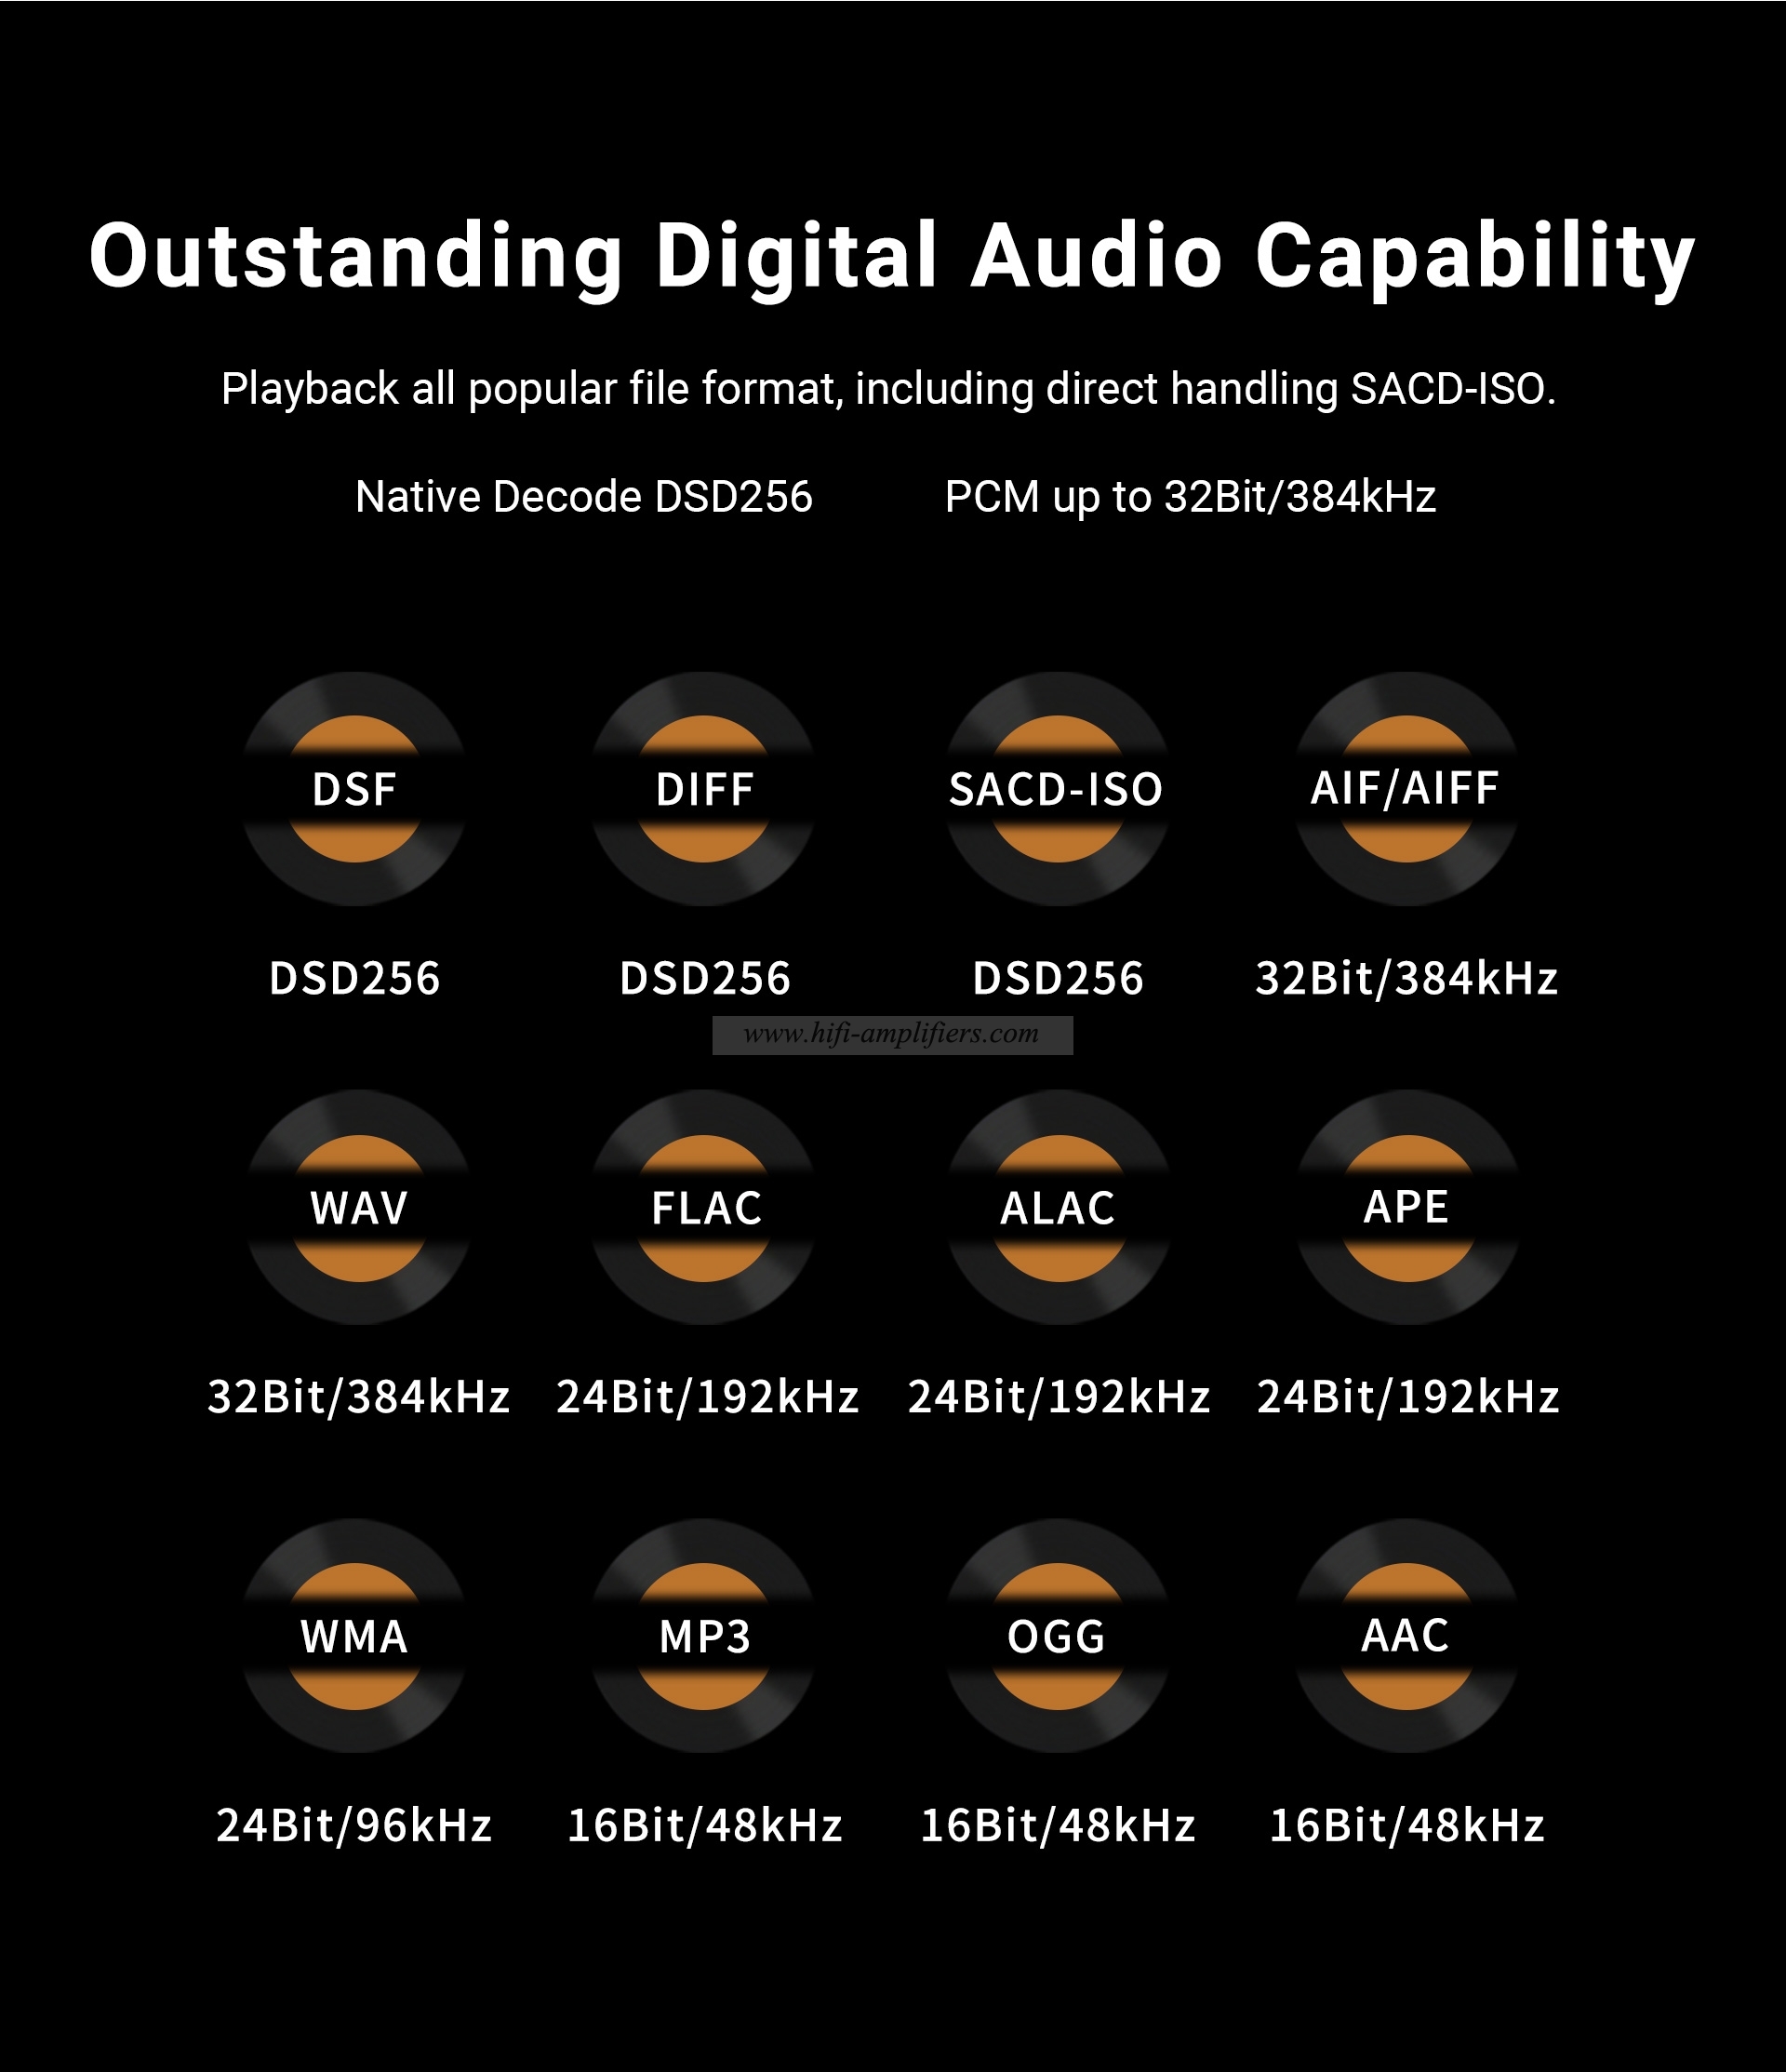 Cayin N3Pro (N3 Pro) Fully Balanced Dual Timbre Portable Digital Audio Player